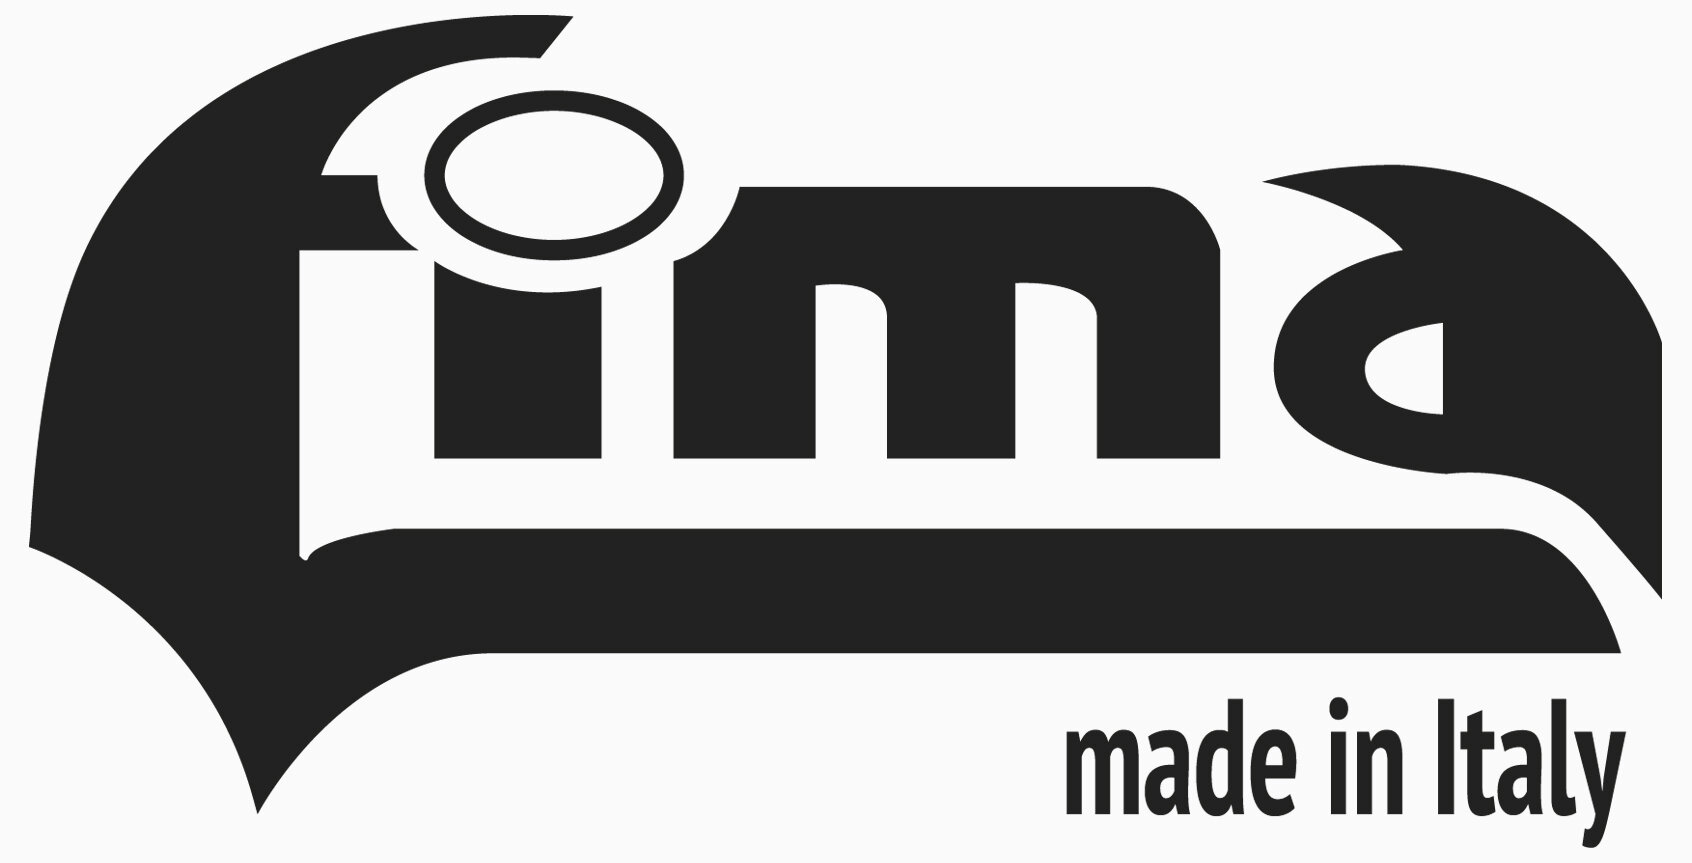 Logotipo FIMA Negro inicio.jpg